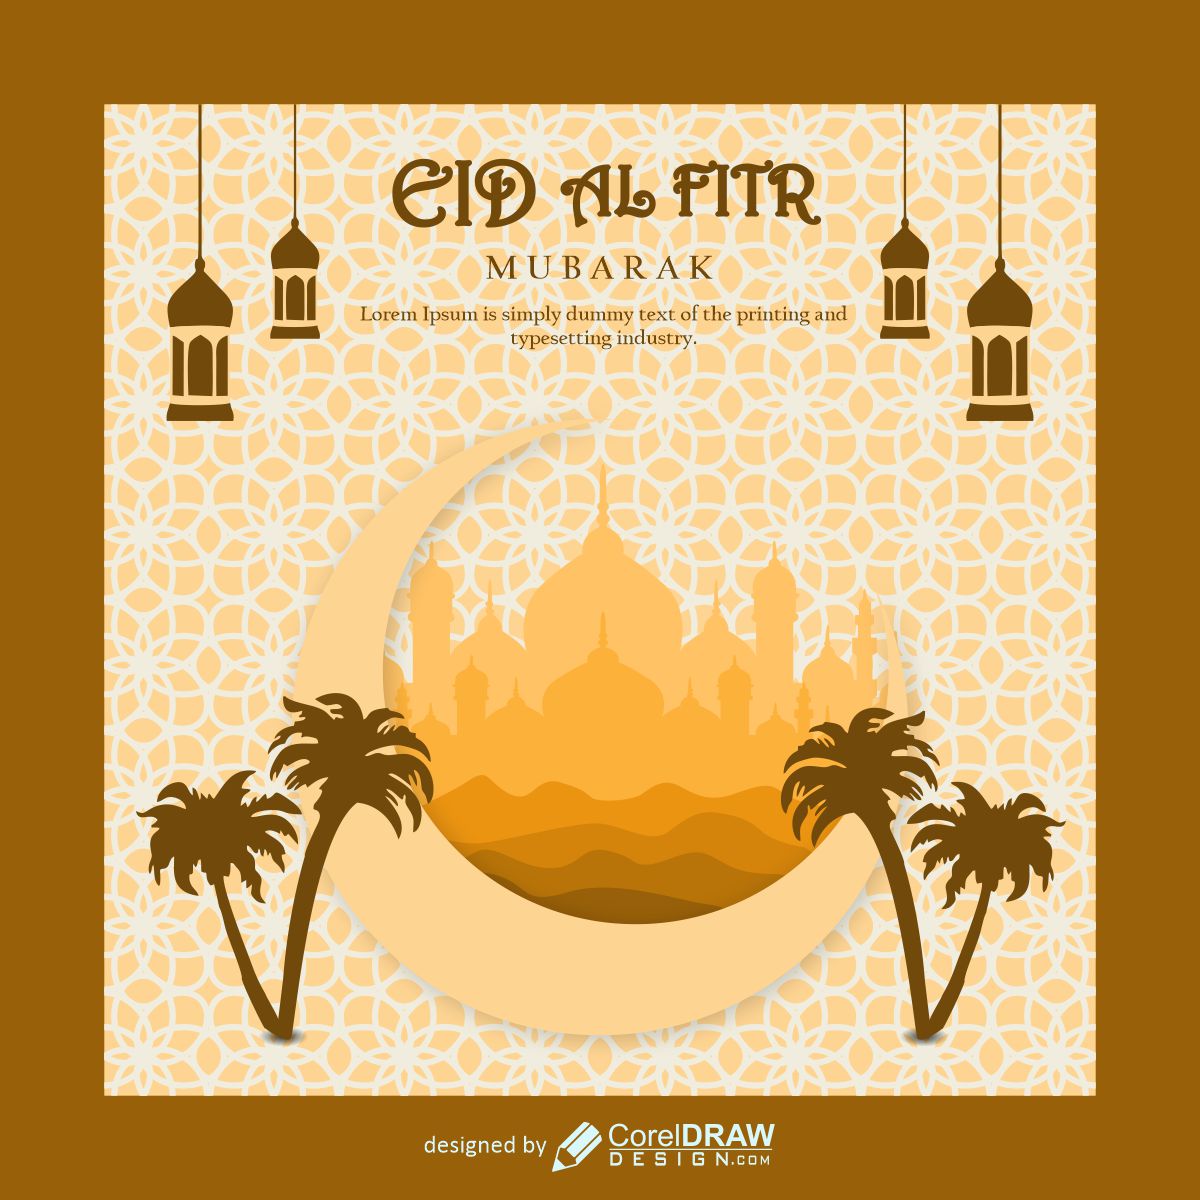 EID AL FITR vector design for free